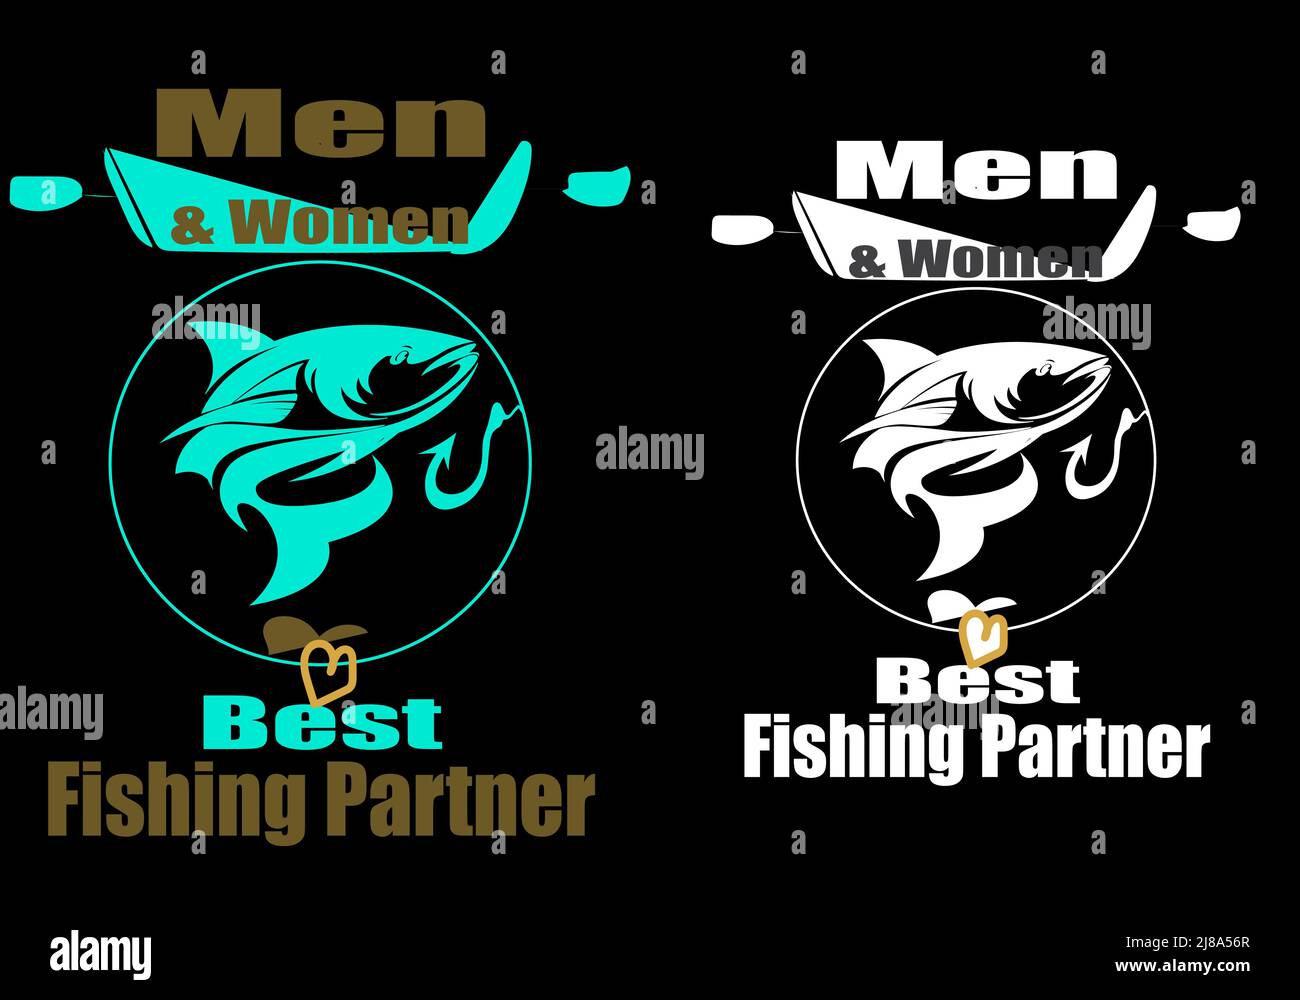 Men & Women Best Fishing Partner design Template Stock Vector